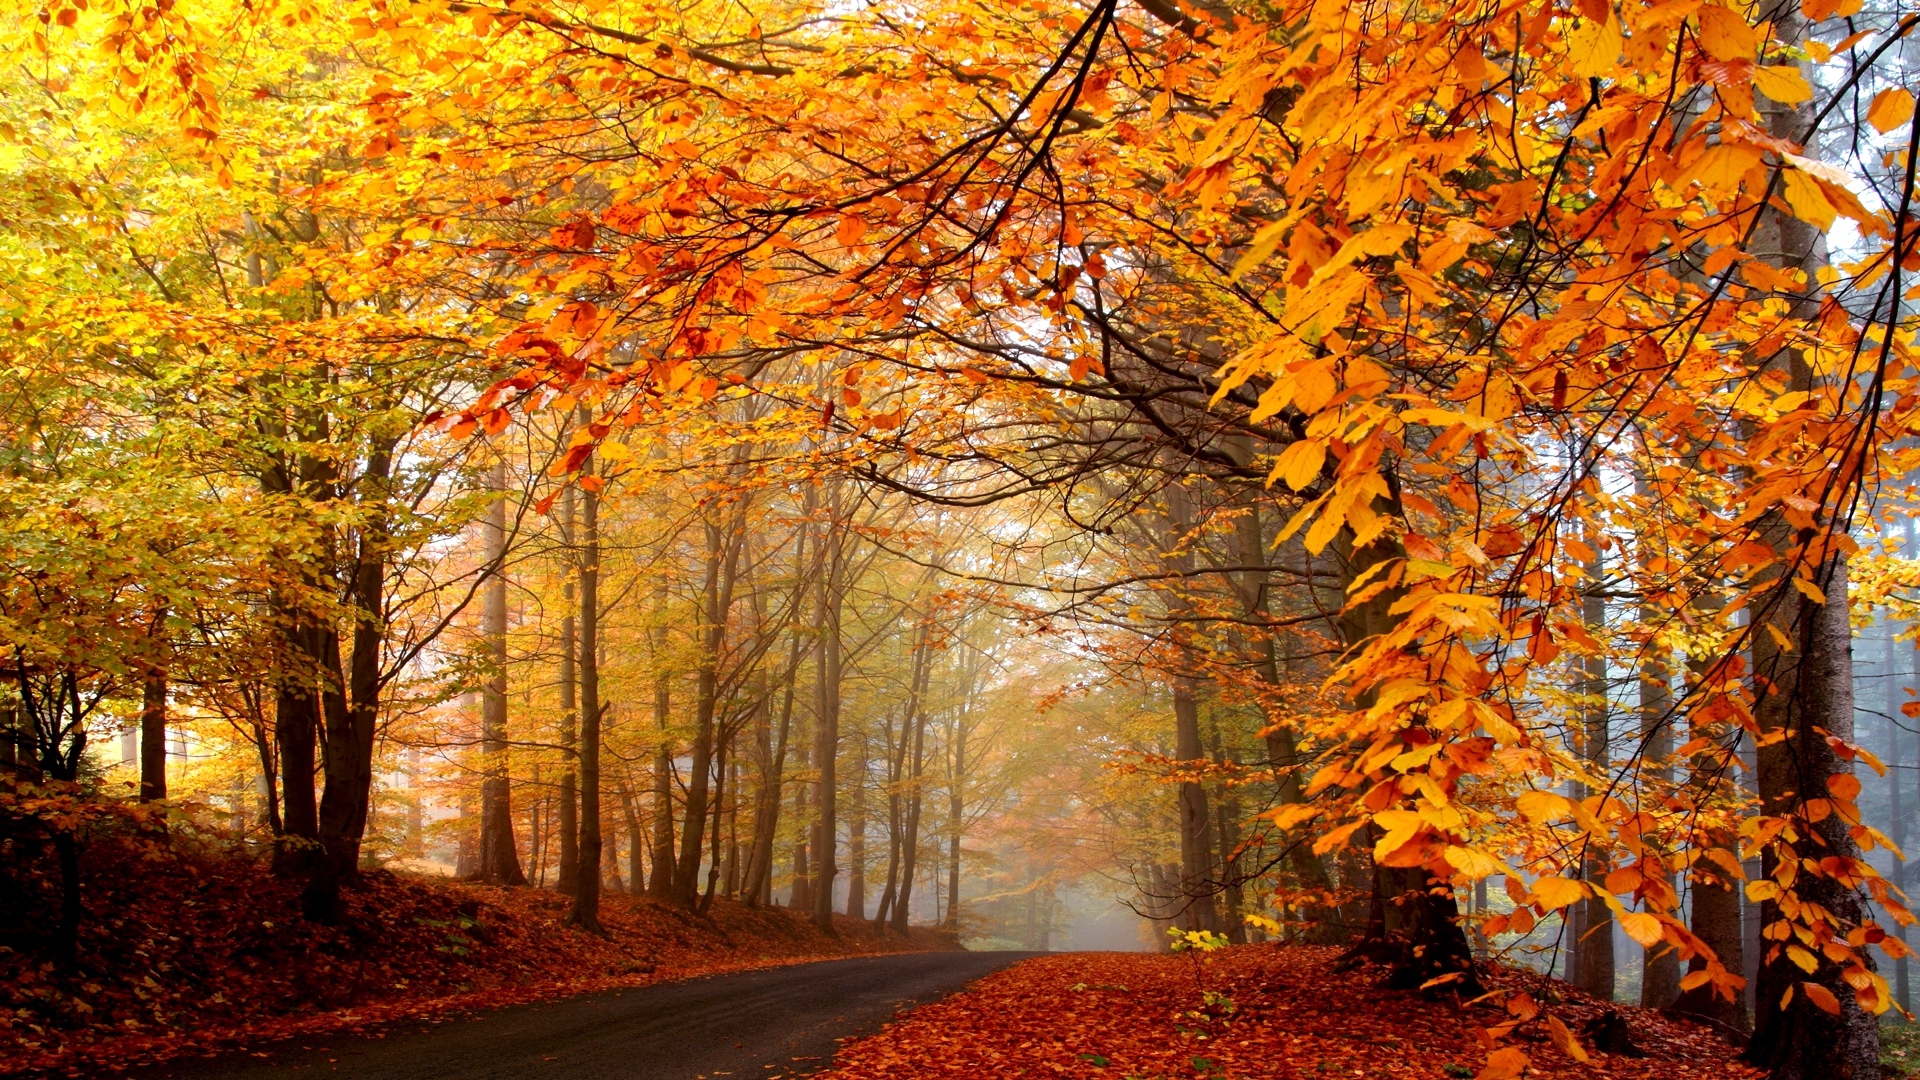 Download wallpaper 1920x1080 autumn, trees, road, fog, haze, asphalt, leaves, yellow, brightly full hd, hdtv, fhd, 1080p HD background